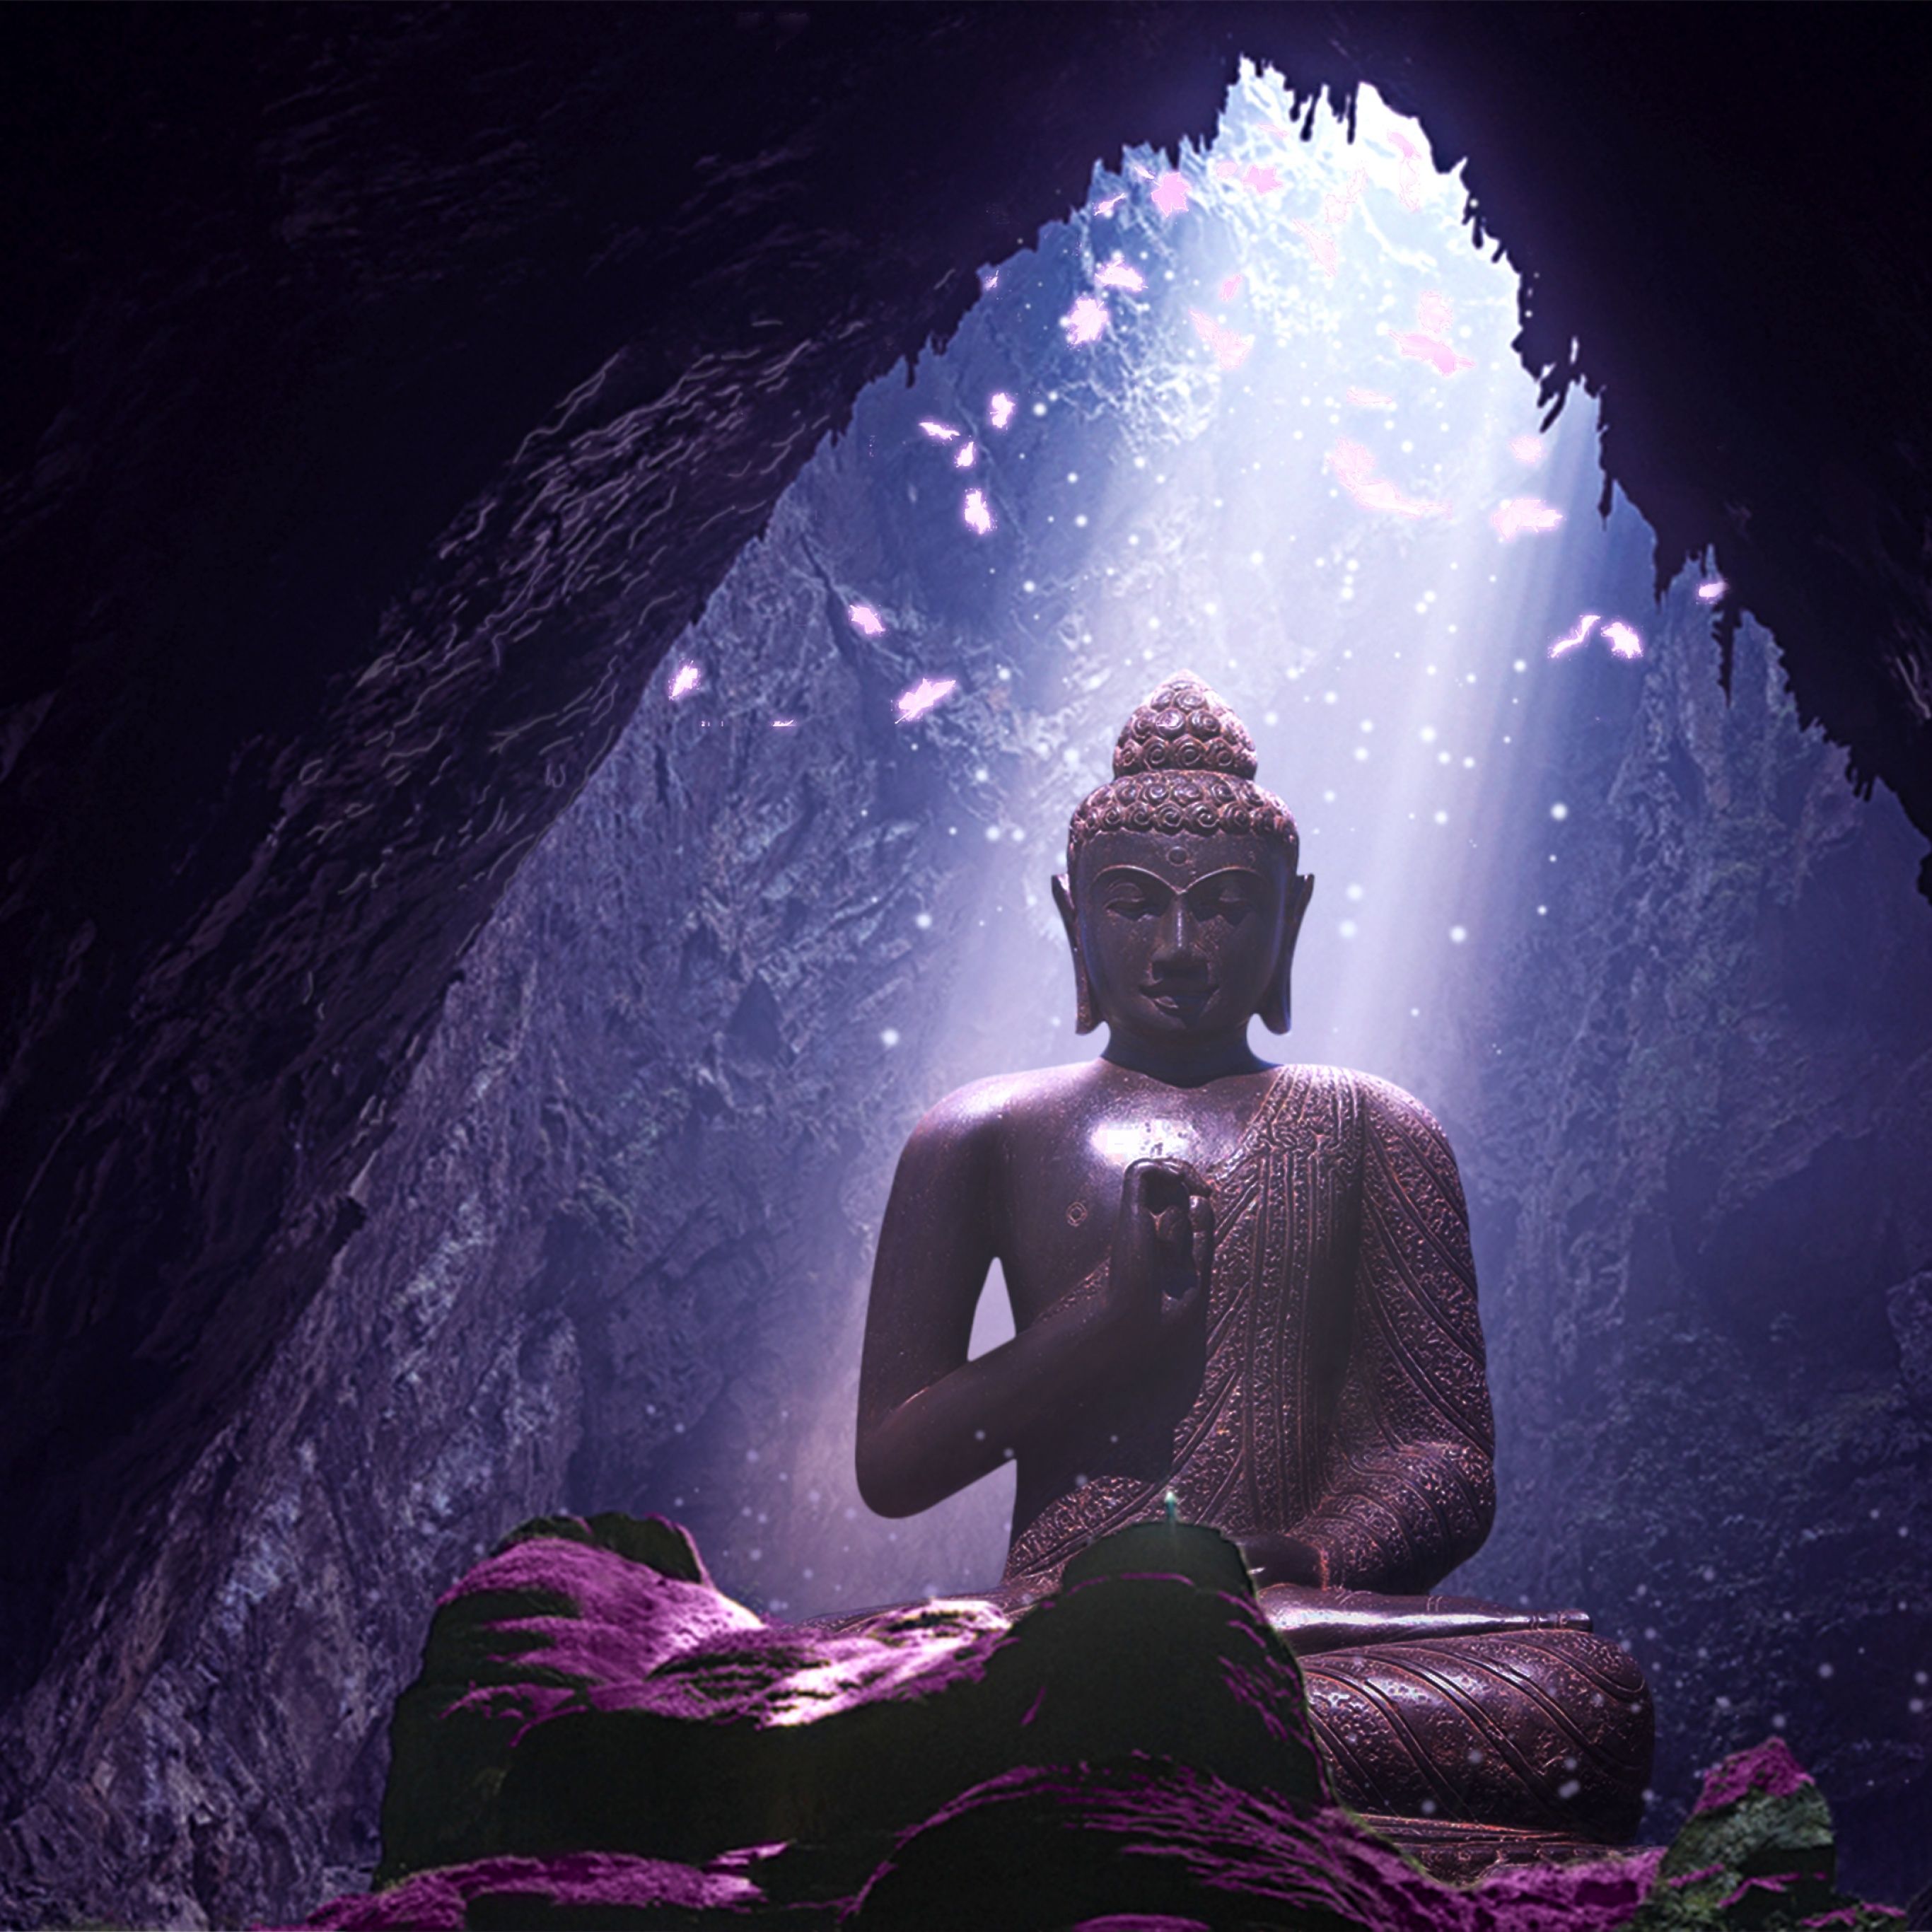  Buddhismus Hintergrundbild 2732x2732. Lord Buddha Wallpaper 4K, Statue, Cave, Sunlight, Fantasy